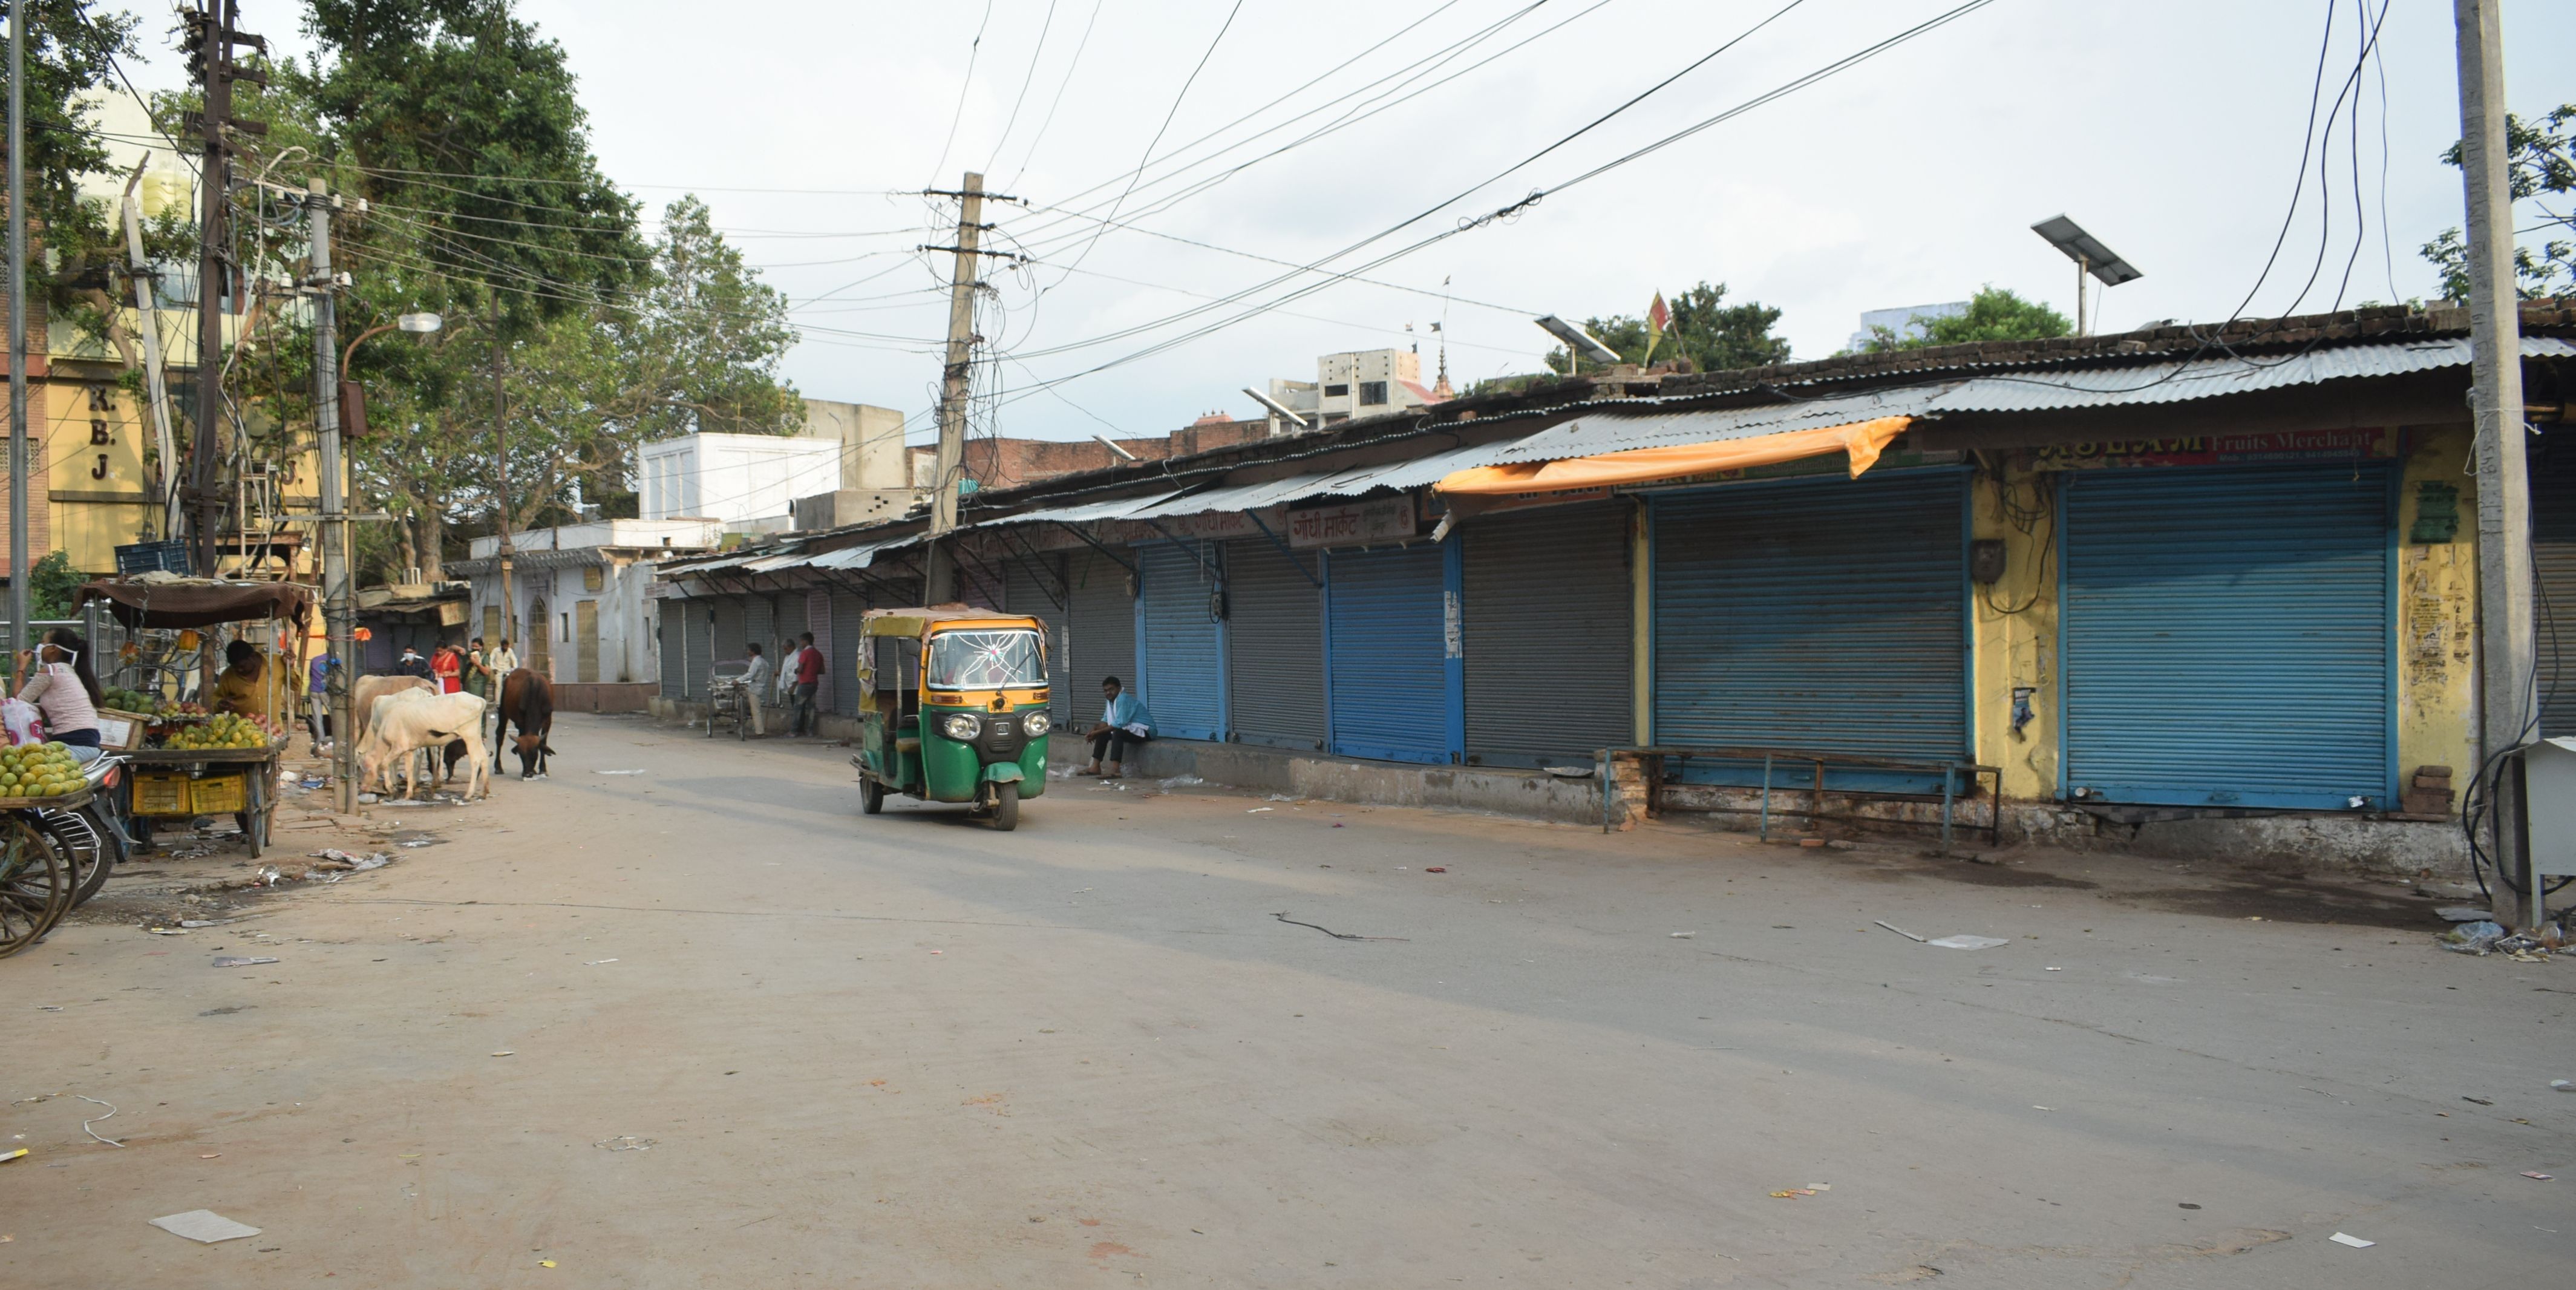 Curfew in Dhaulpur, lockdown in Mania